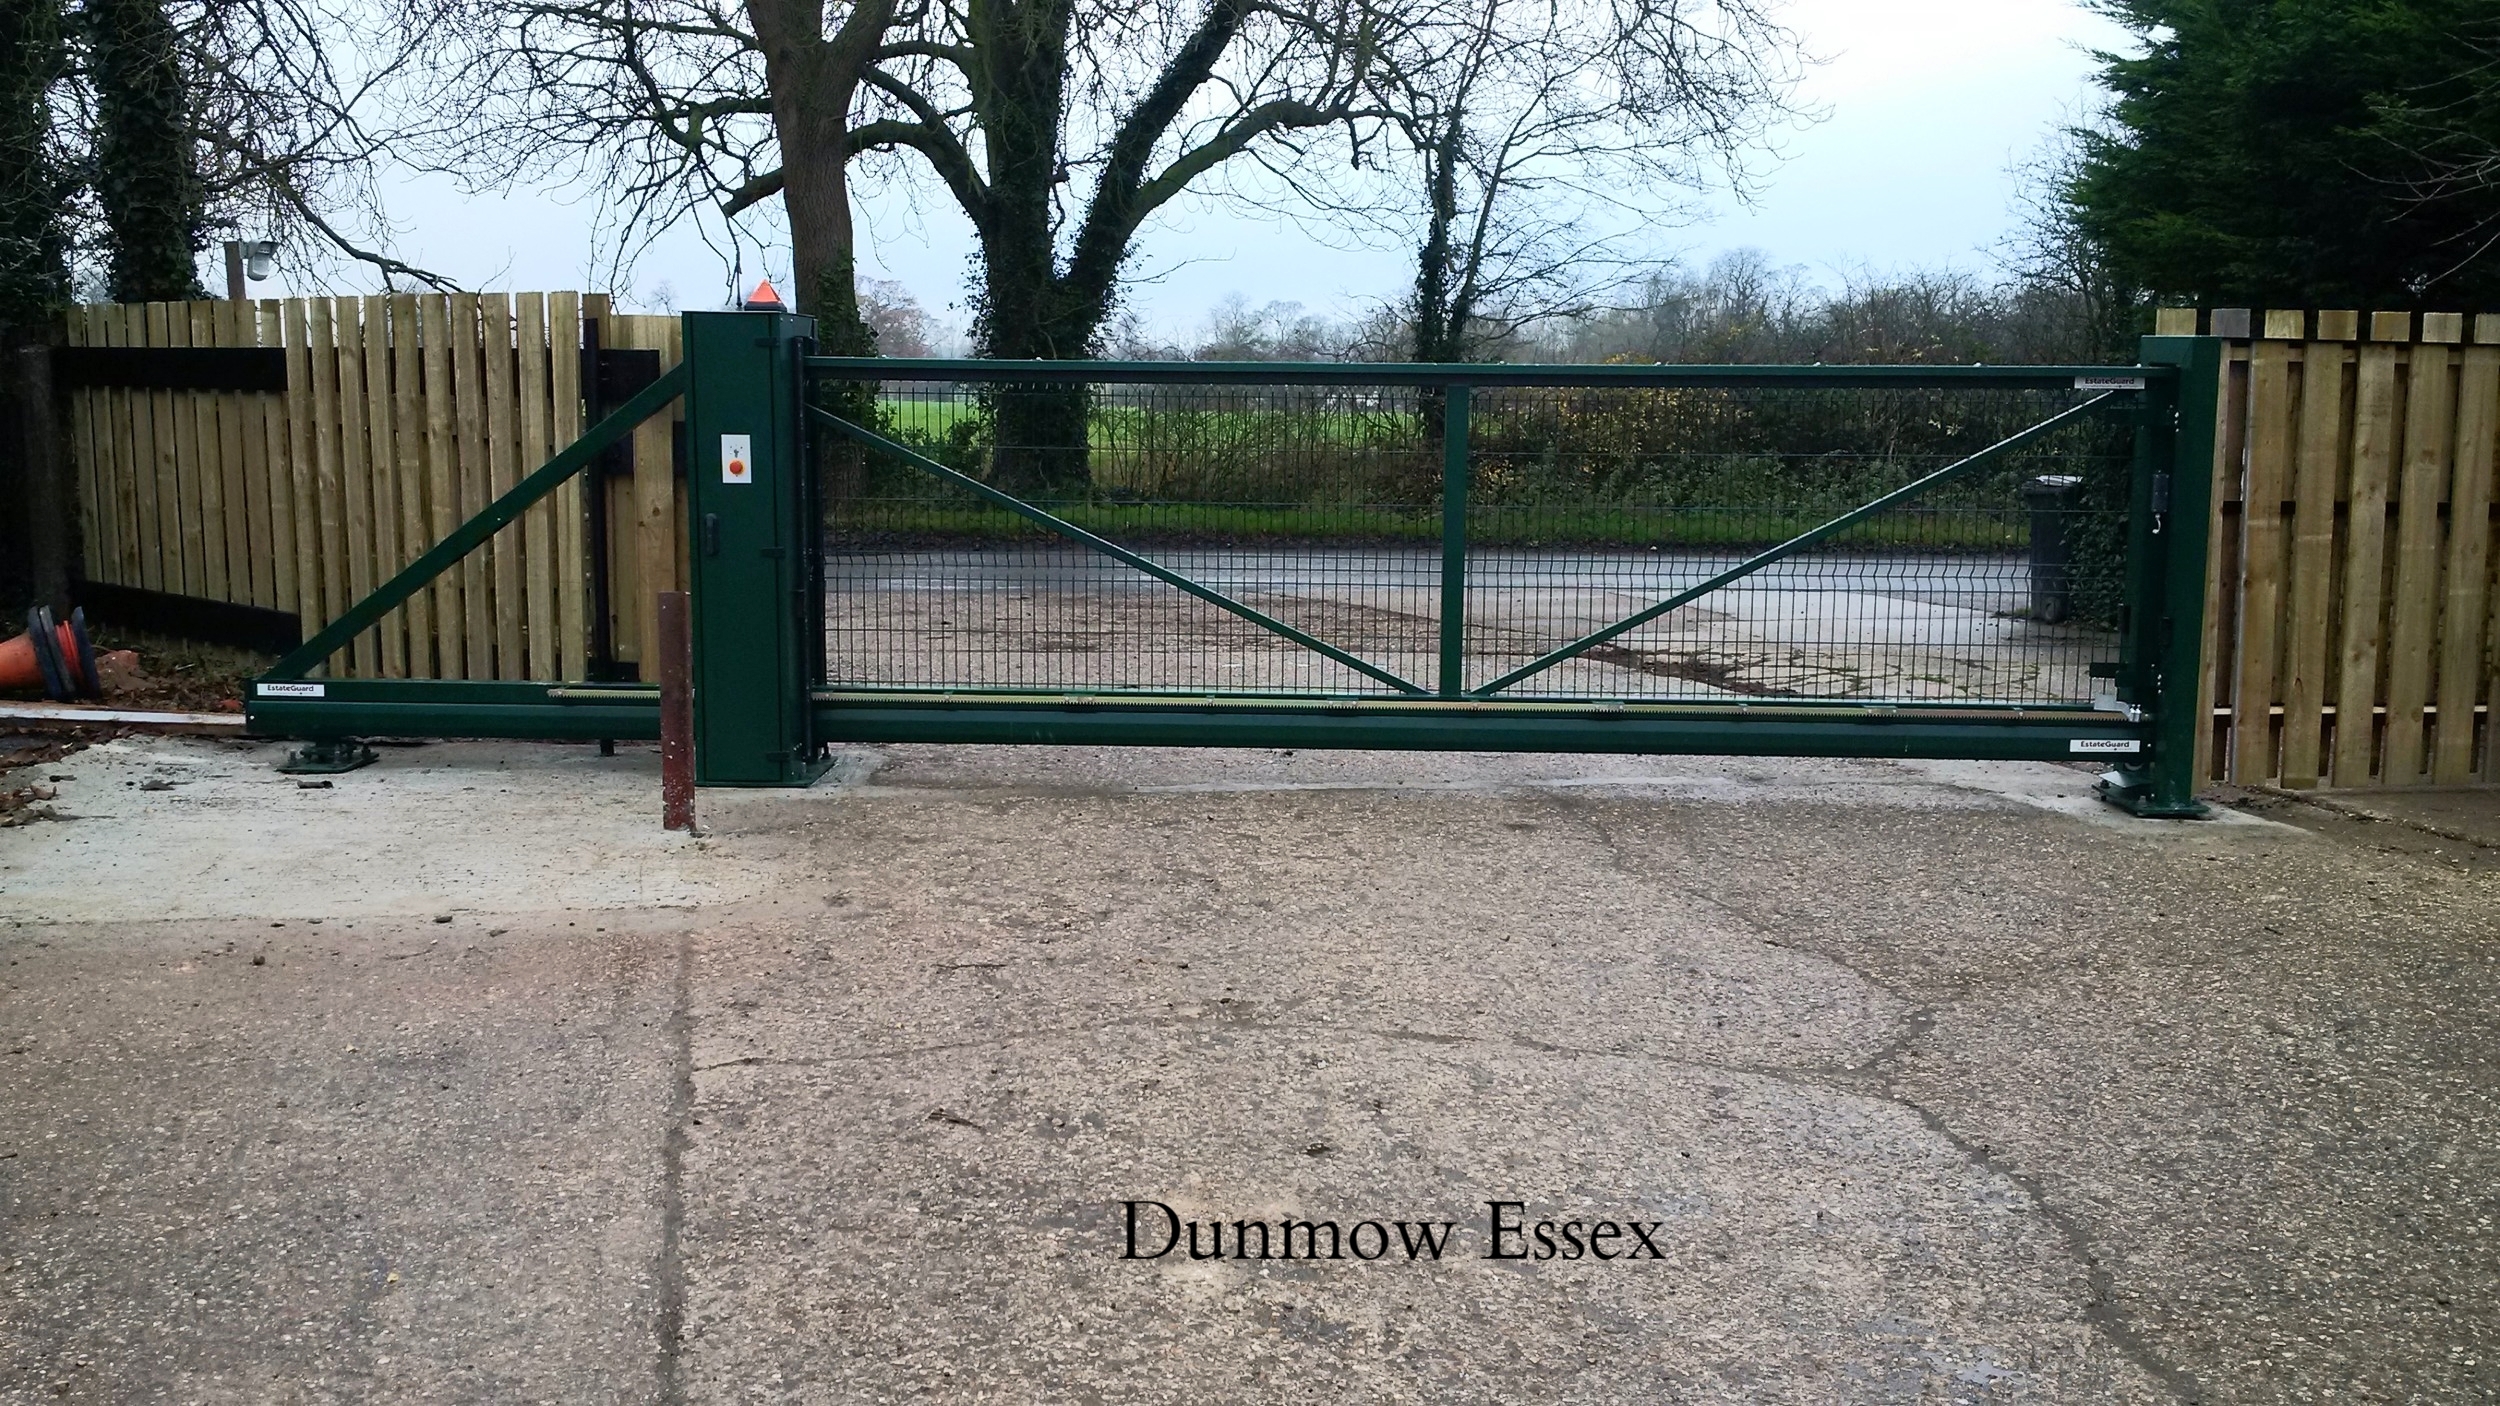 Copy of Dunmow Essex